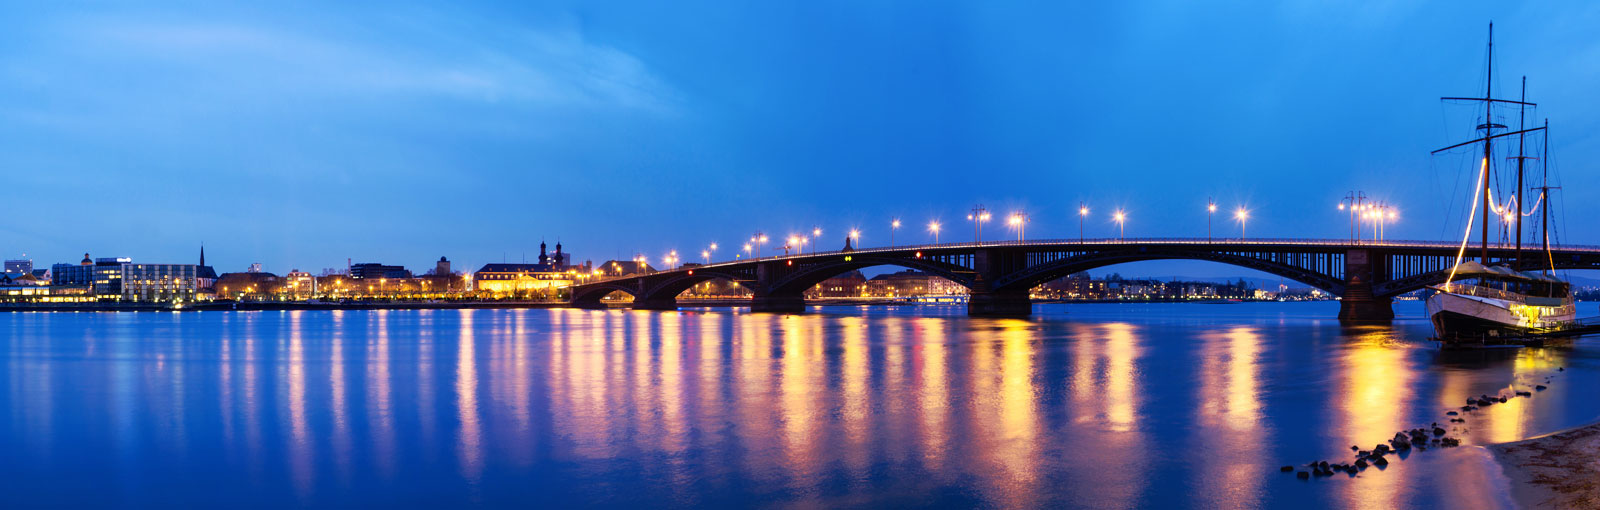 Mainz Theodor-Heuss-Brücke